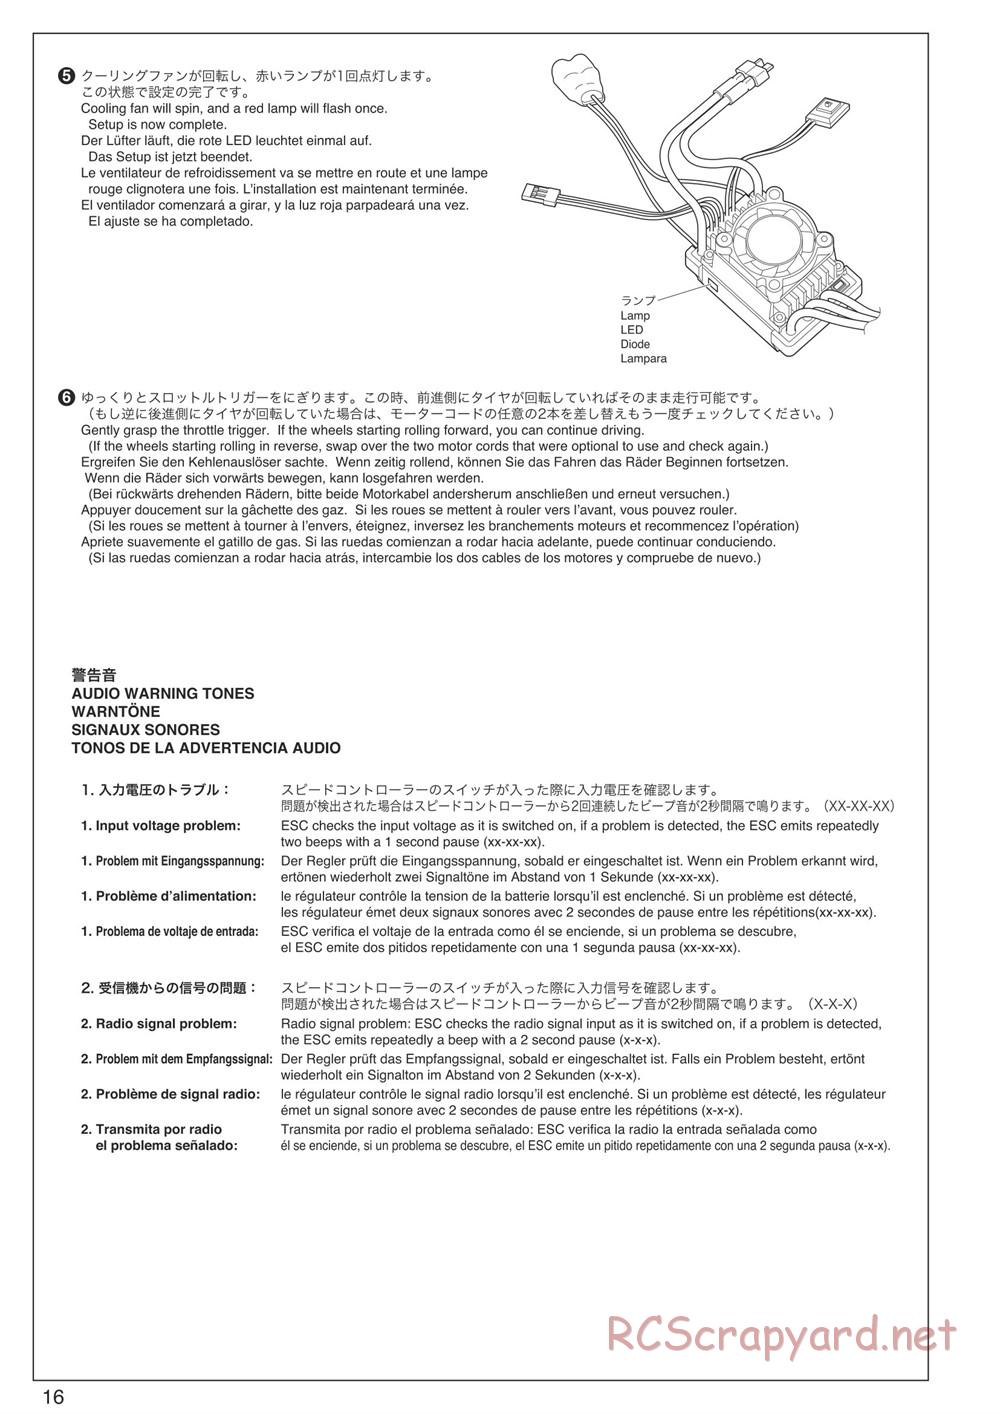 Kyosho - DMT VE-R - Manual - Page 16